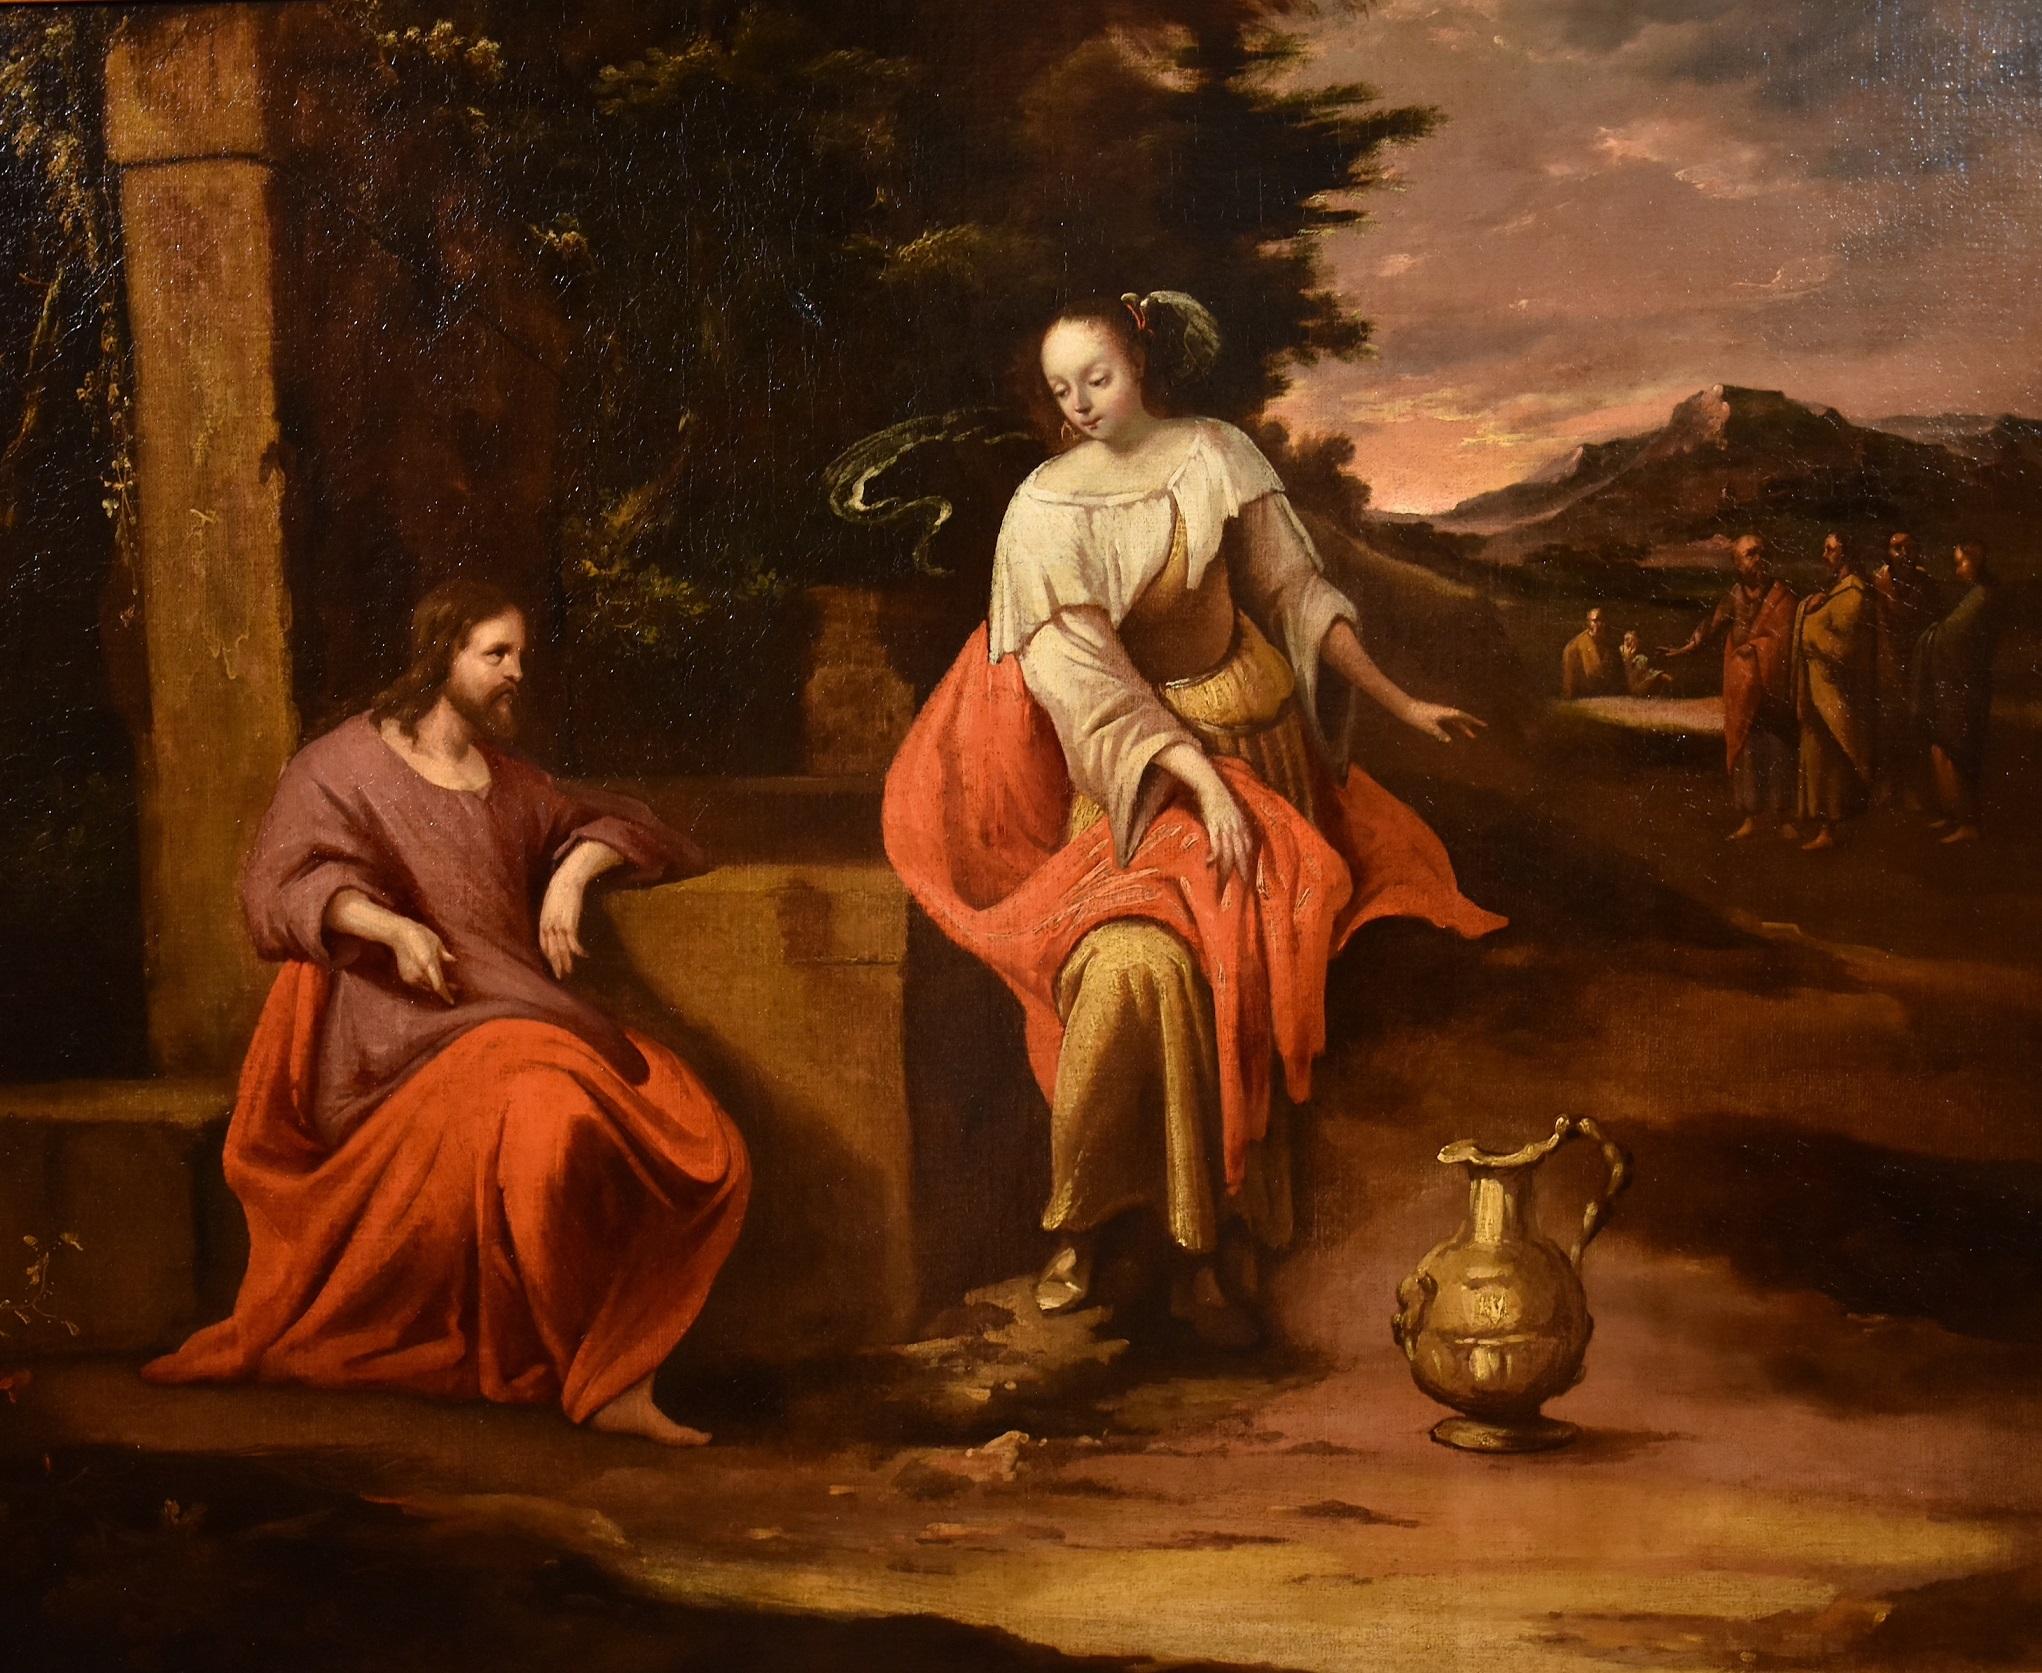 Christ Samaritan Paint Oil on canvas Oil on canvas Flemish Painter 17th Century 1